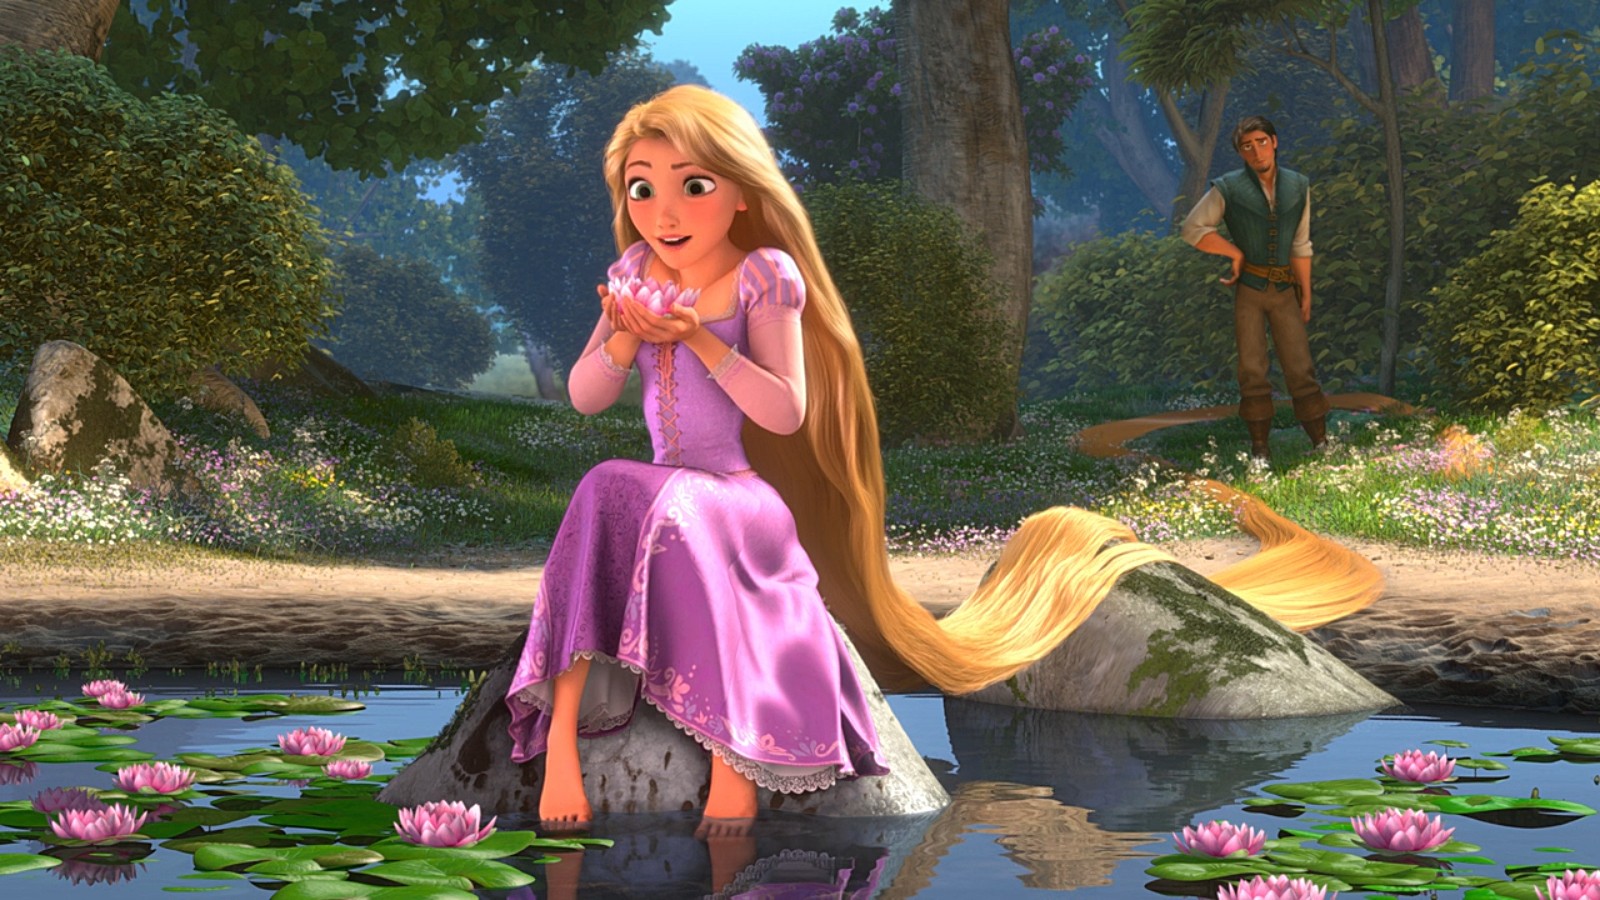 Rapunzel, barefoot, blonde, long hair, women, Tangled, flowers, movies,  Disney, animated movies, film stills | 1600x900 Wallpaper - wallhaven.cc